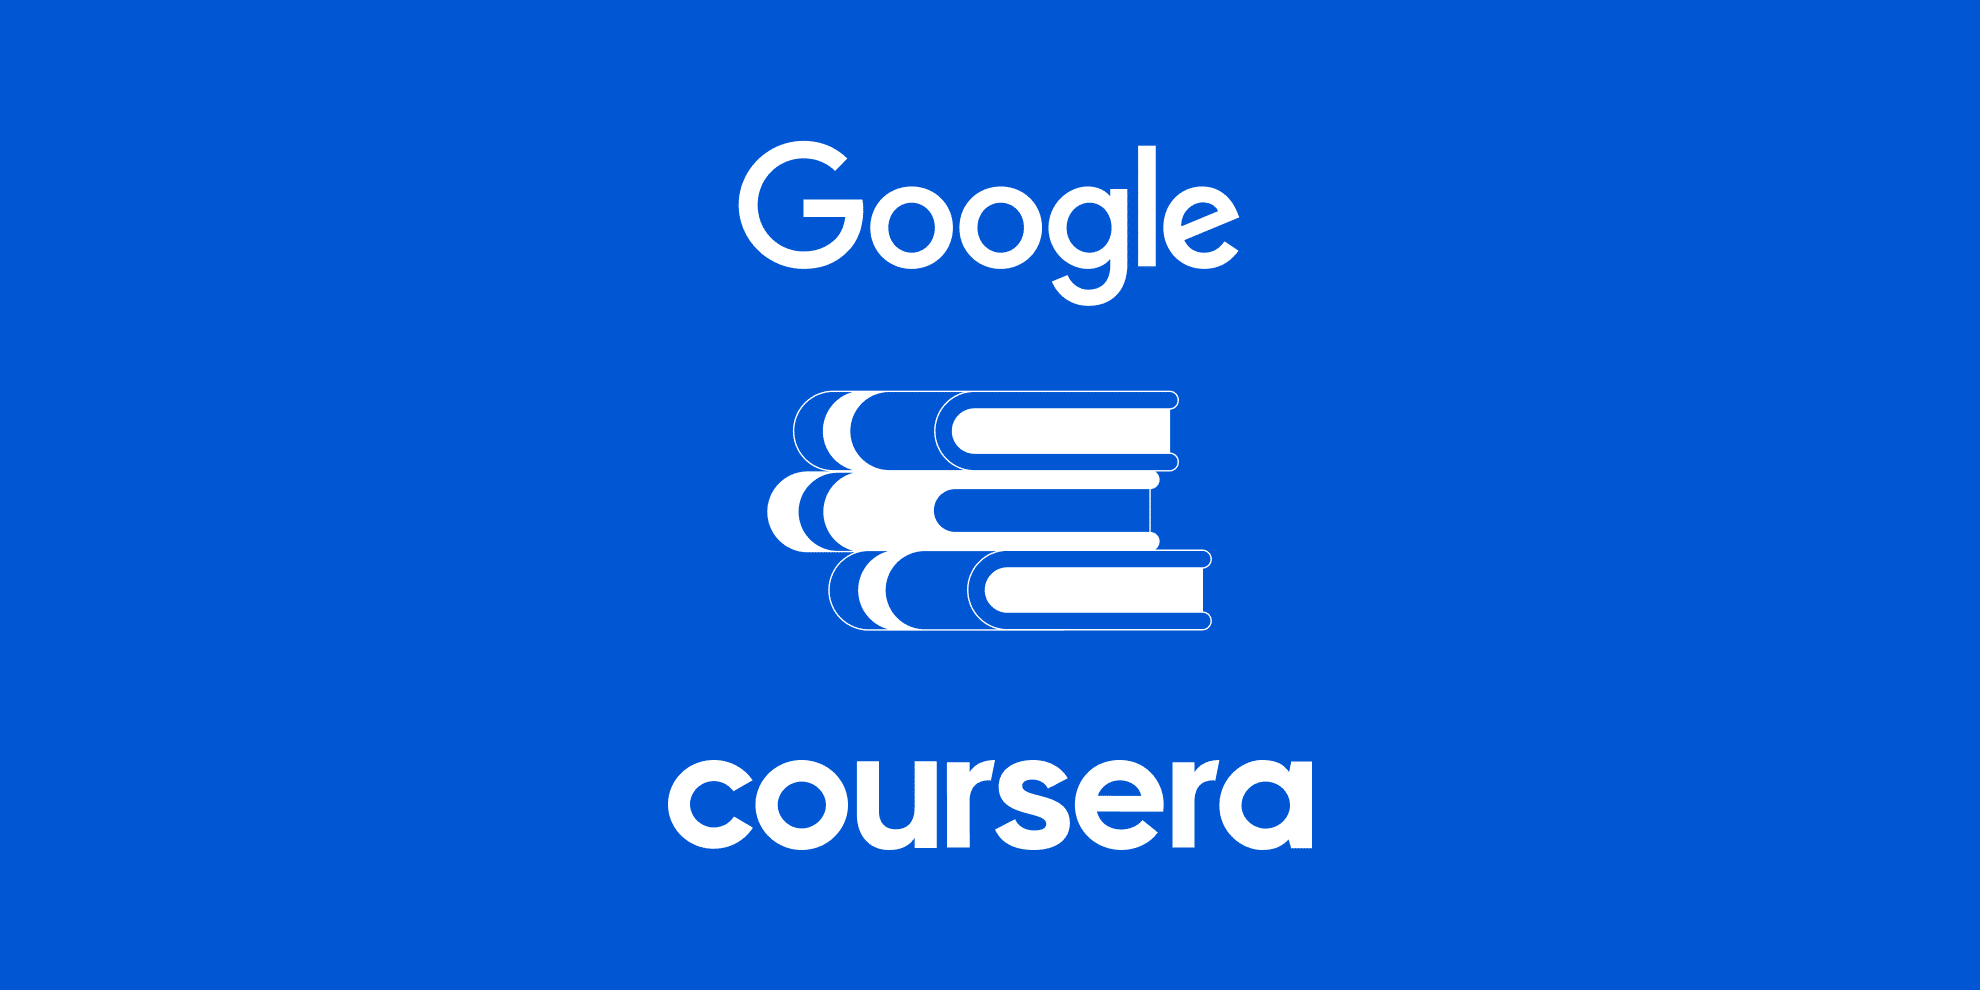 Google Coursera Revolutionizing Online Education.